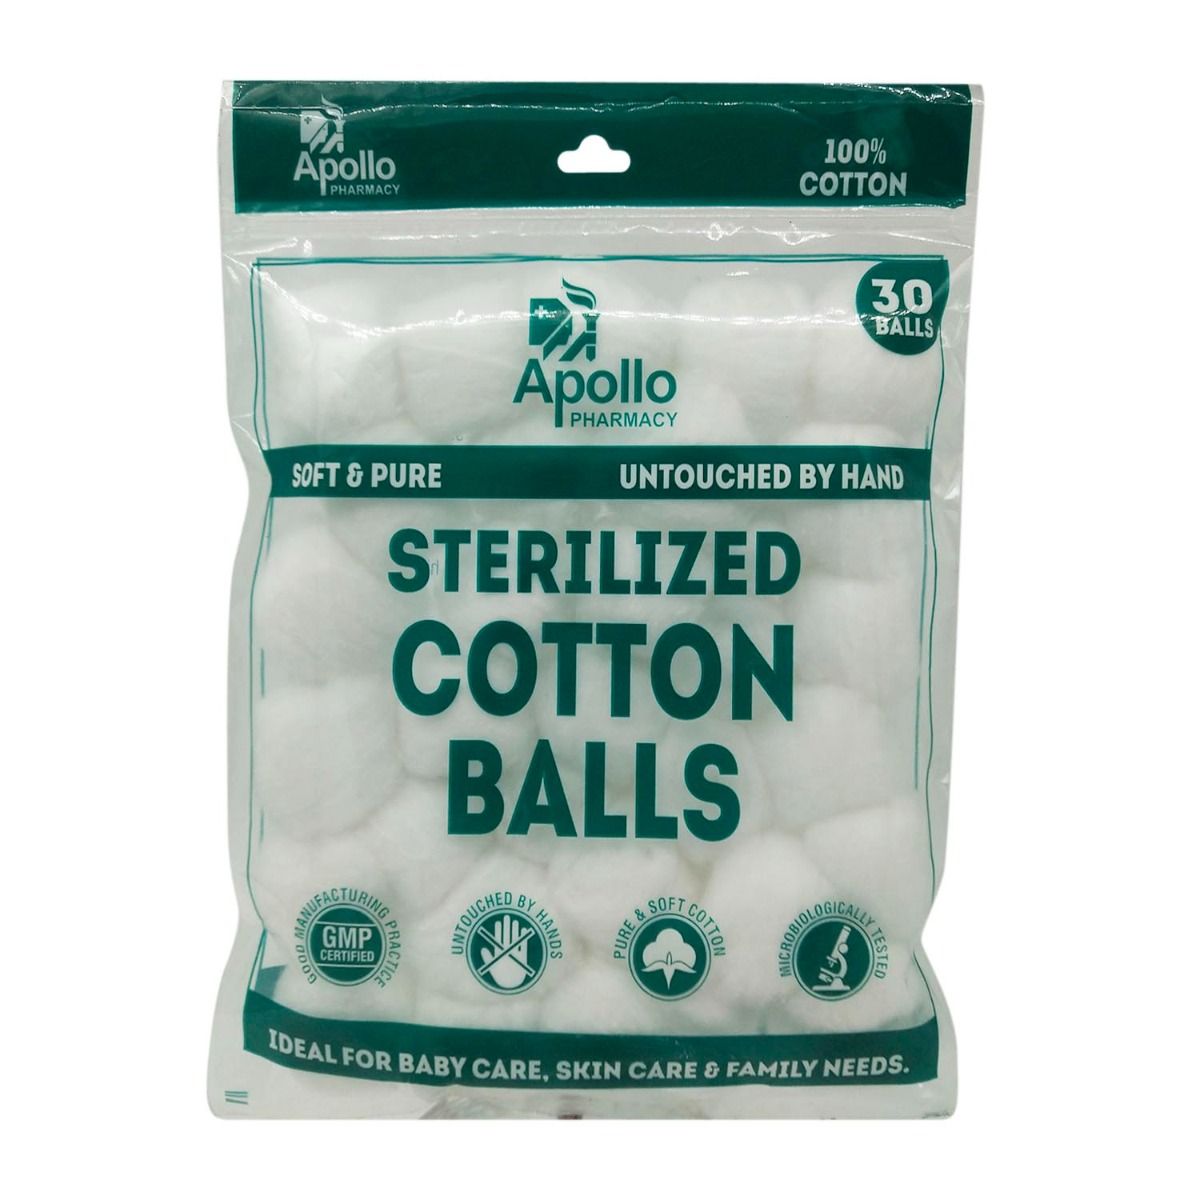 Apollo Pharmacy Sterilized Cotton Balls, 30 Count, Pack of 1 